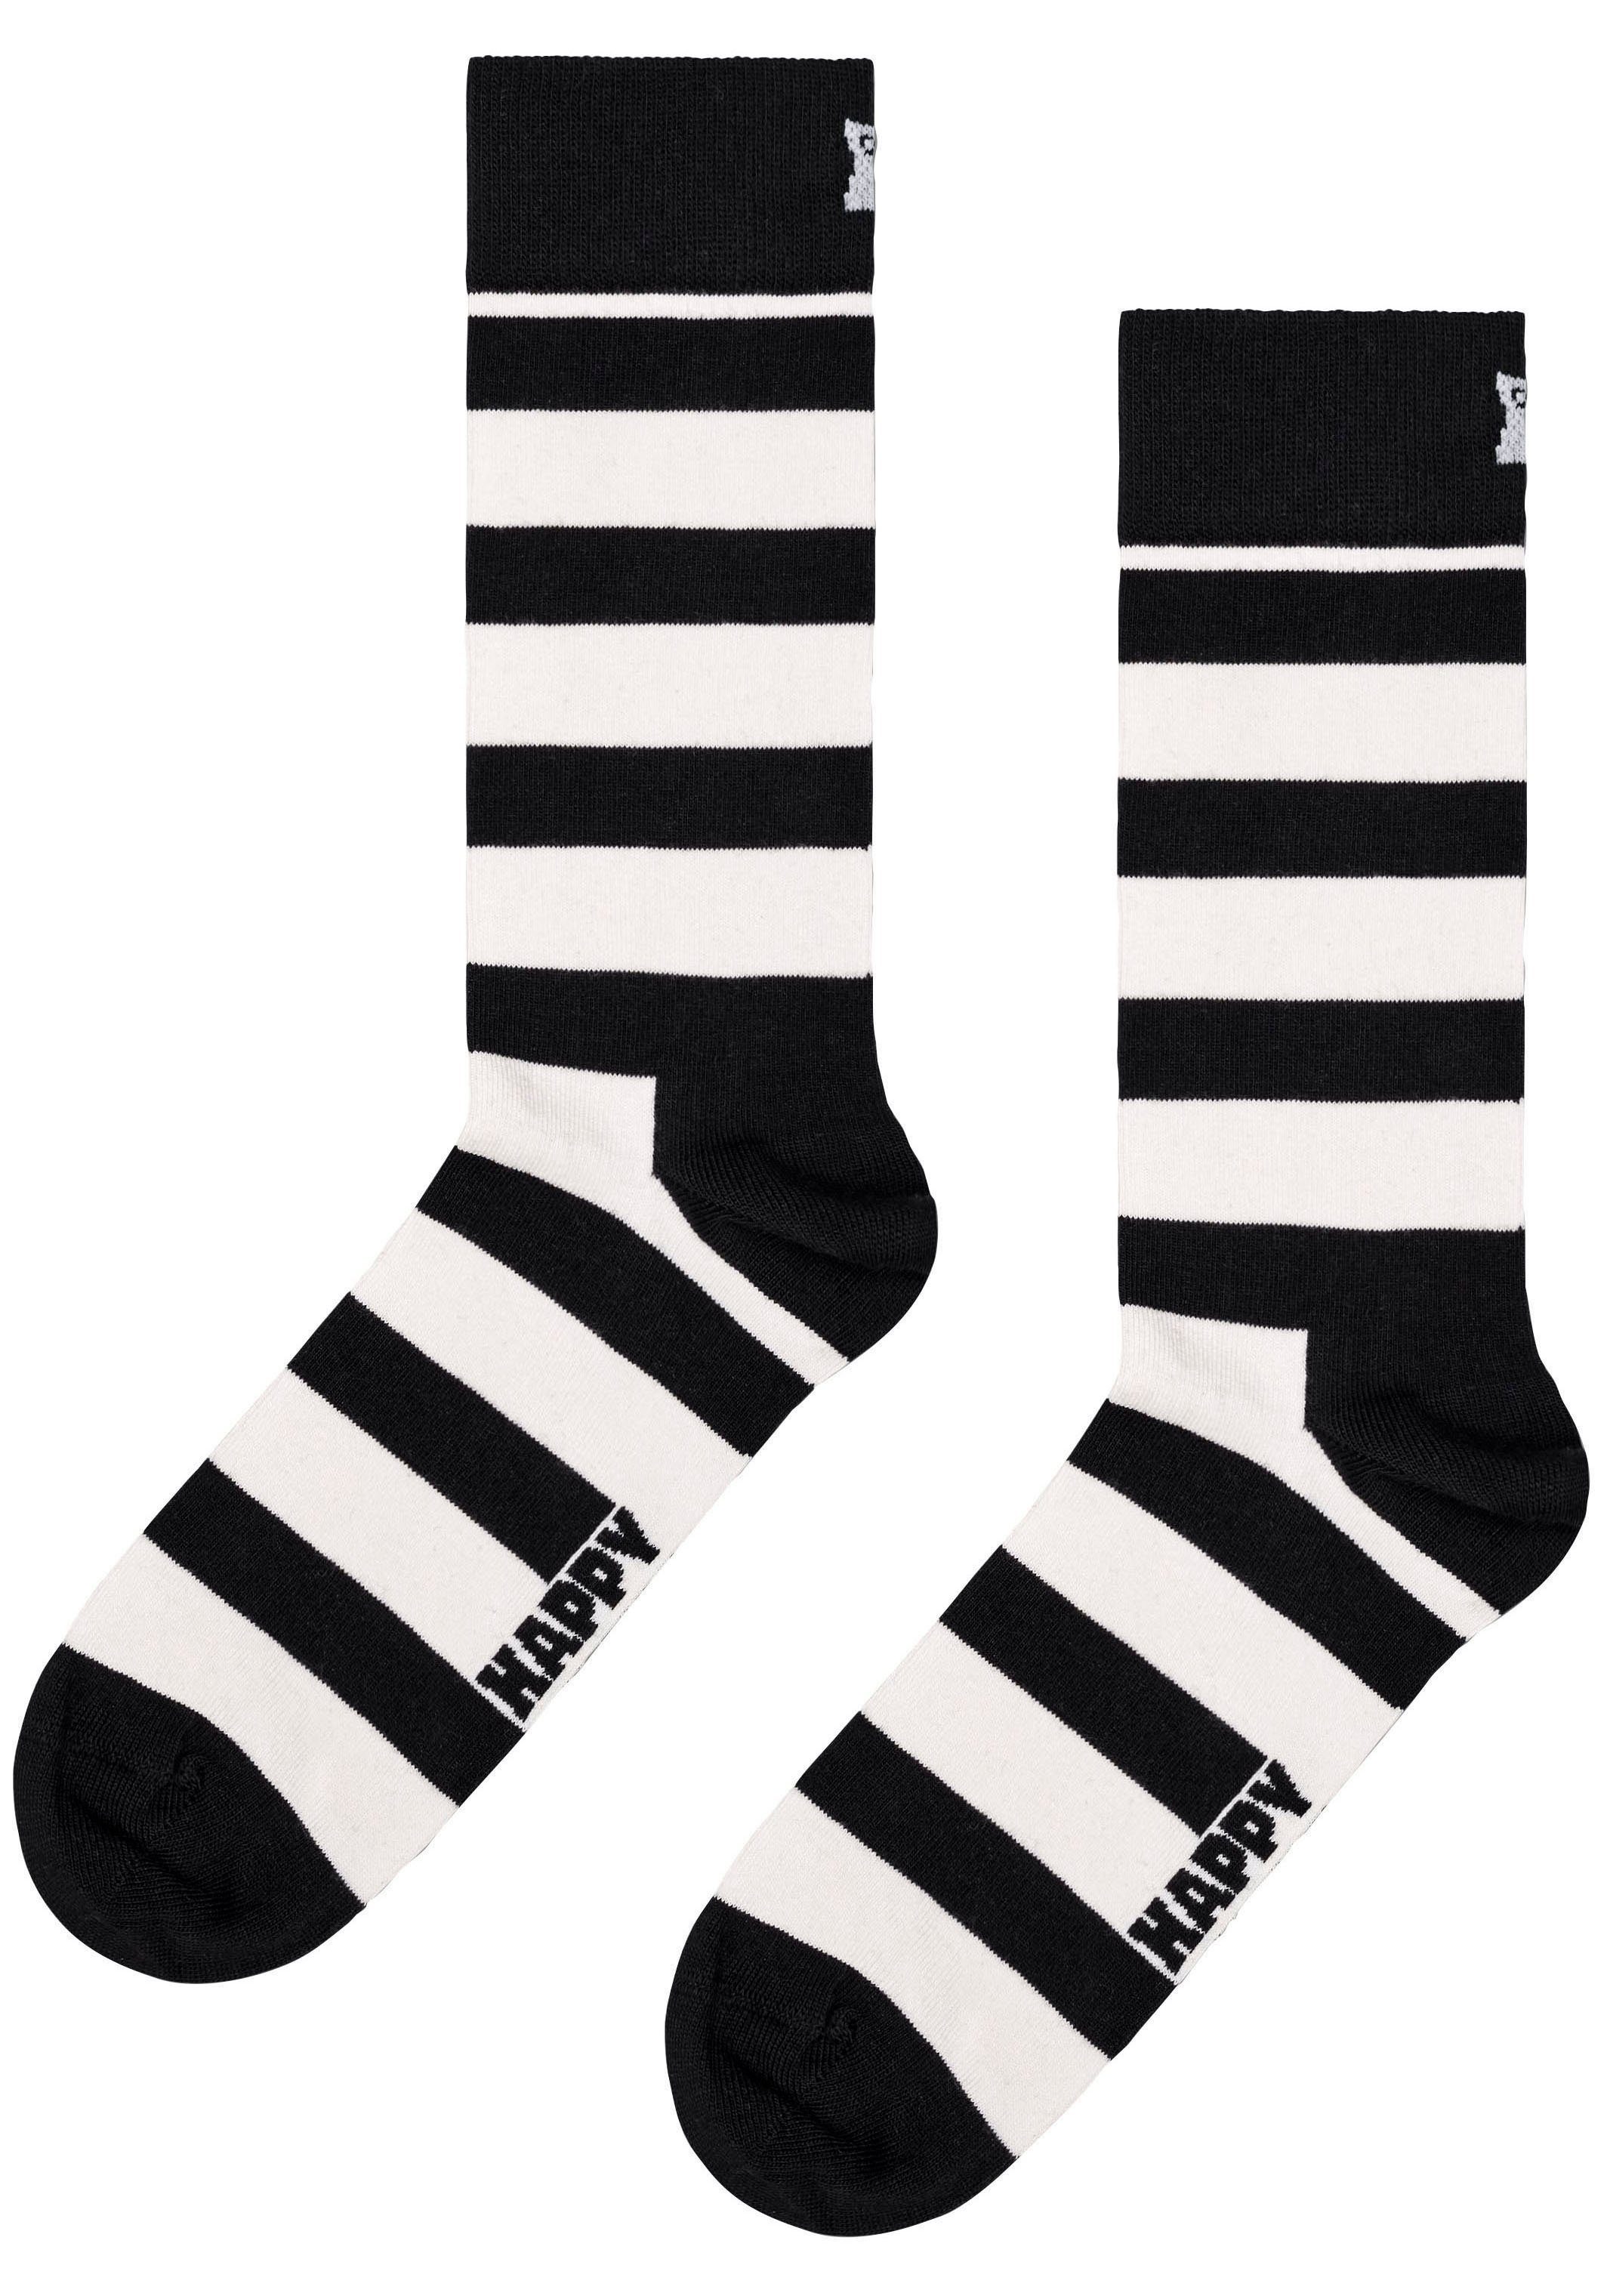 Socken Black Gift Socks Happy (Packung, Classic Set 4-Paar) grey Socks & White dark